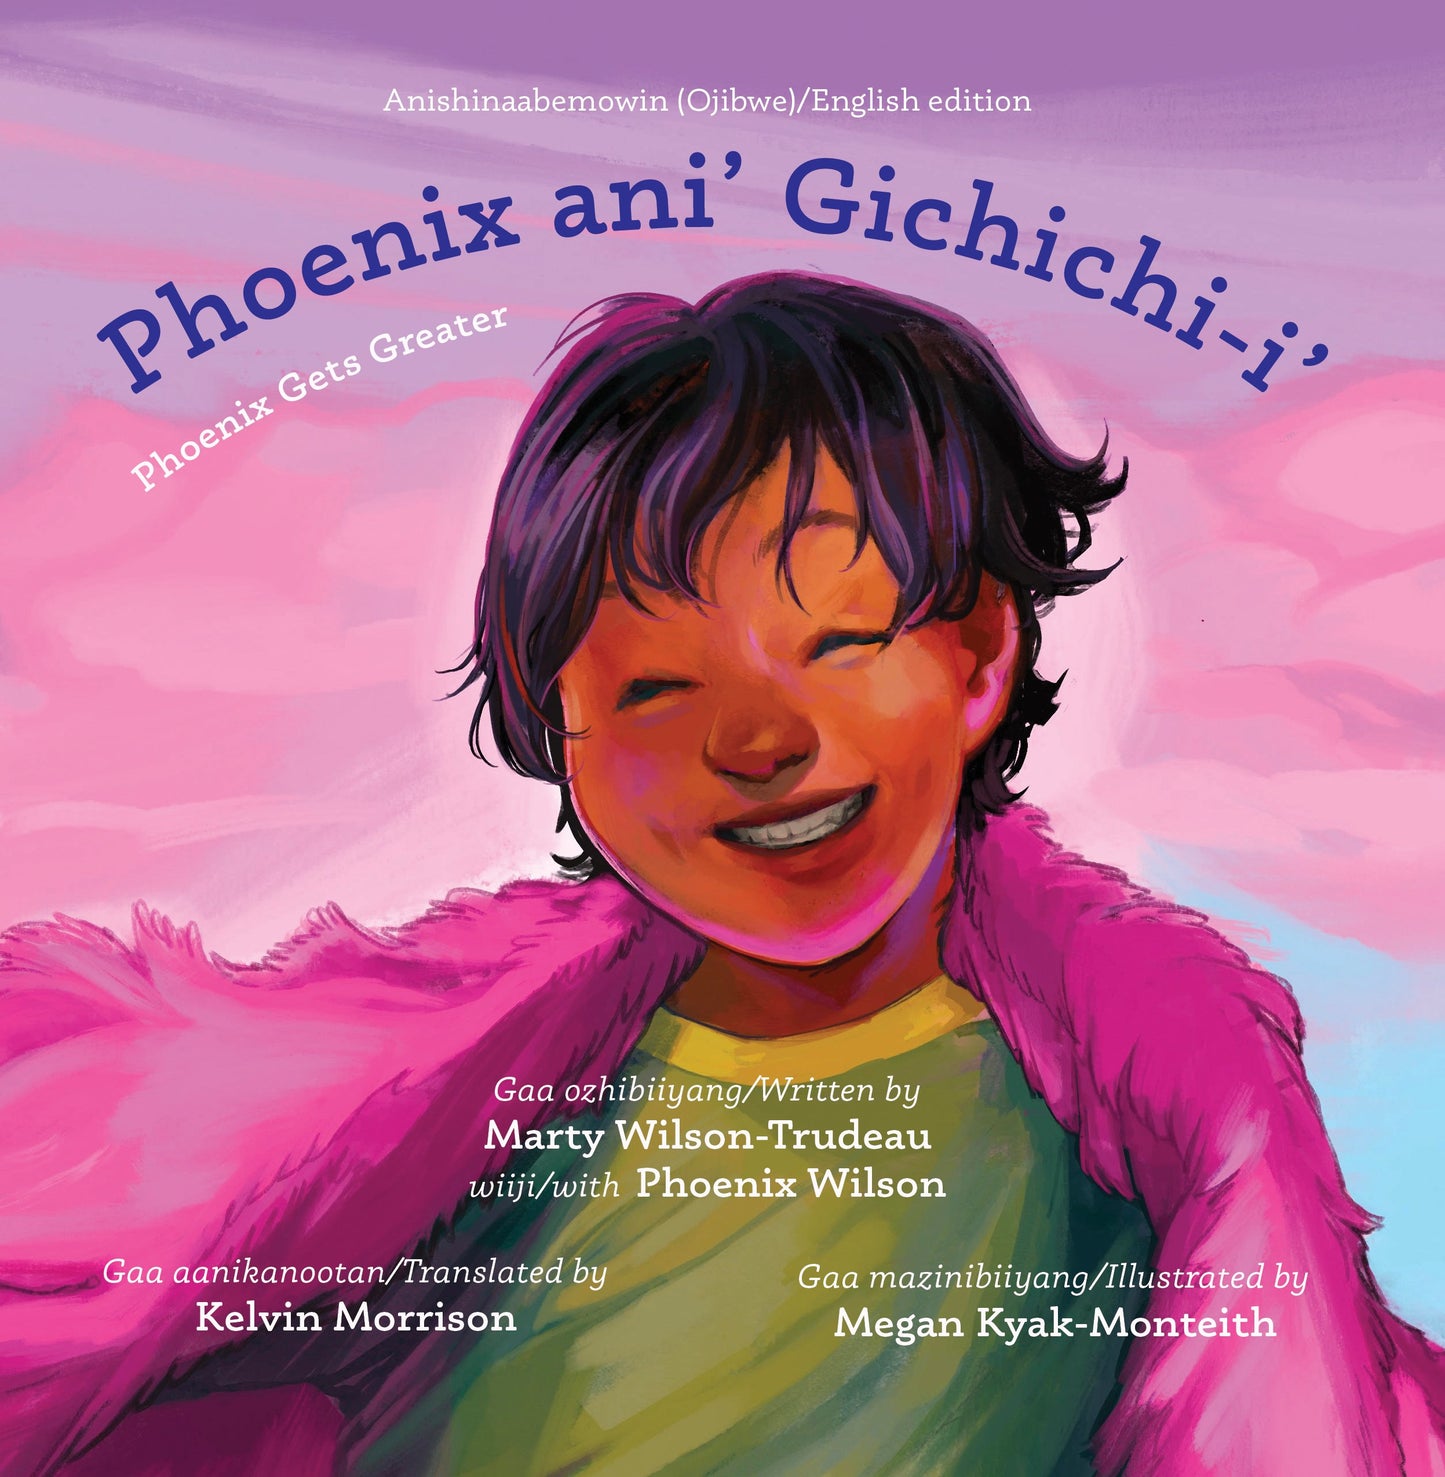 Phoenix ani’ Gichichi-i’ / Phoenix Gets Greater